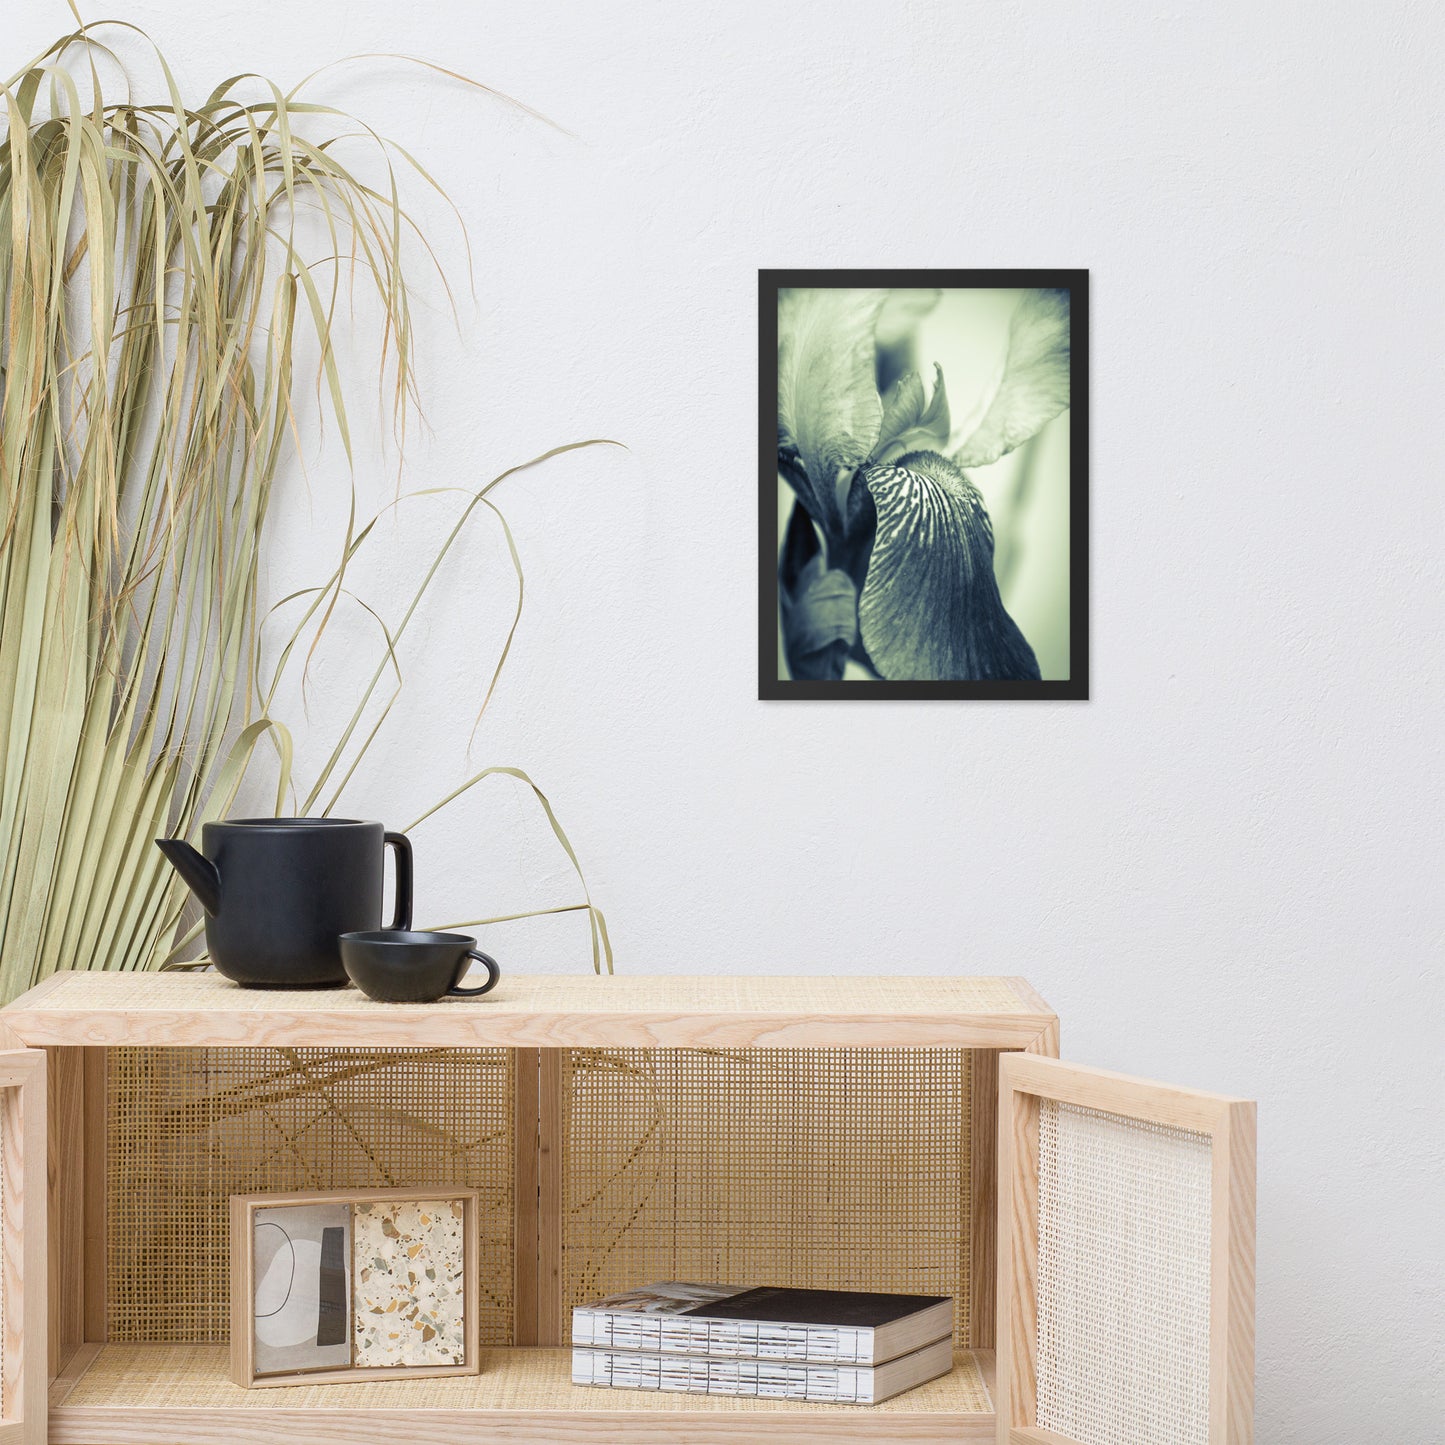 Best Dining Room Art: Abstract Japanese Iris Delight- Botanical / Floral / Flora / Flowers / Nature Photograph Framed Wall Art Print - Artwork - Wall Decor - Home Decor